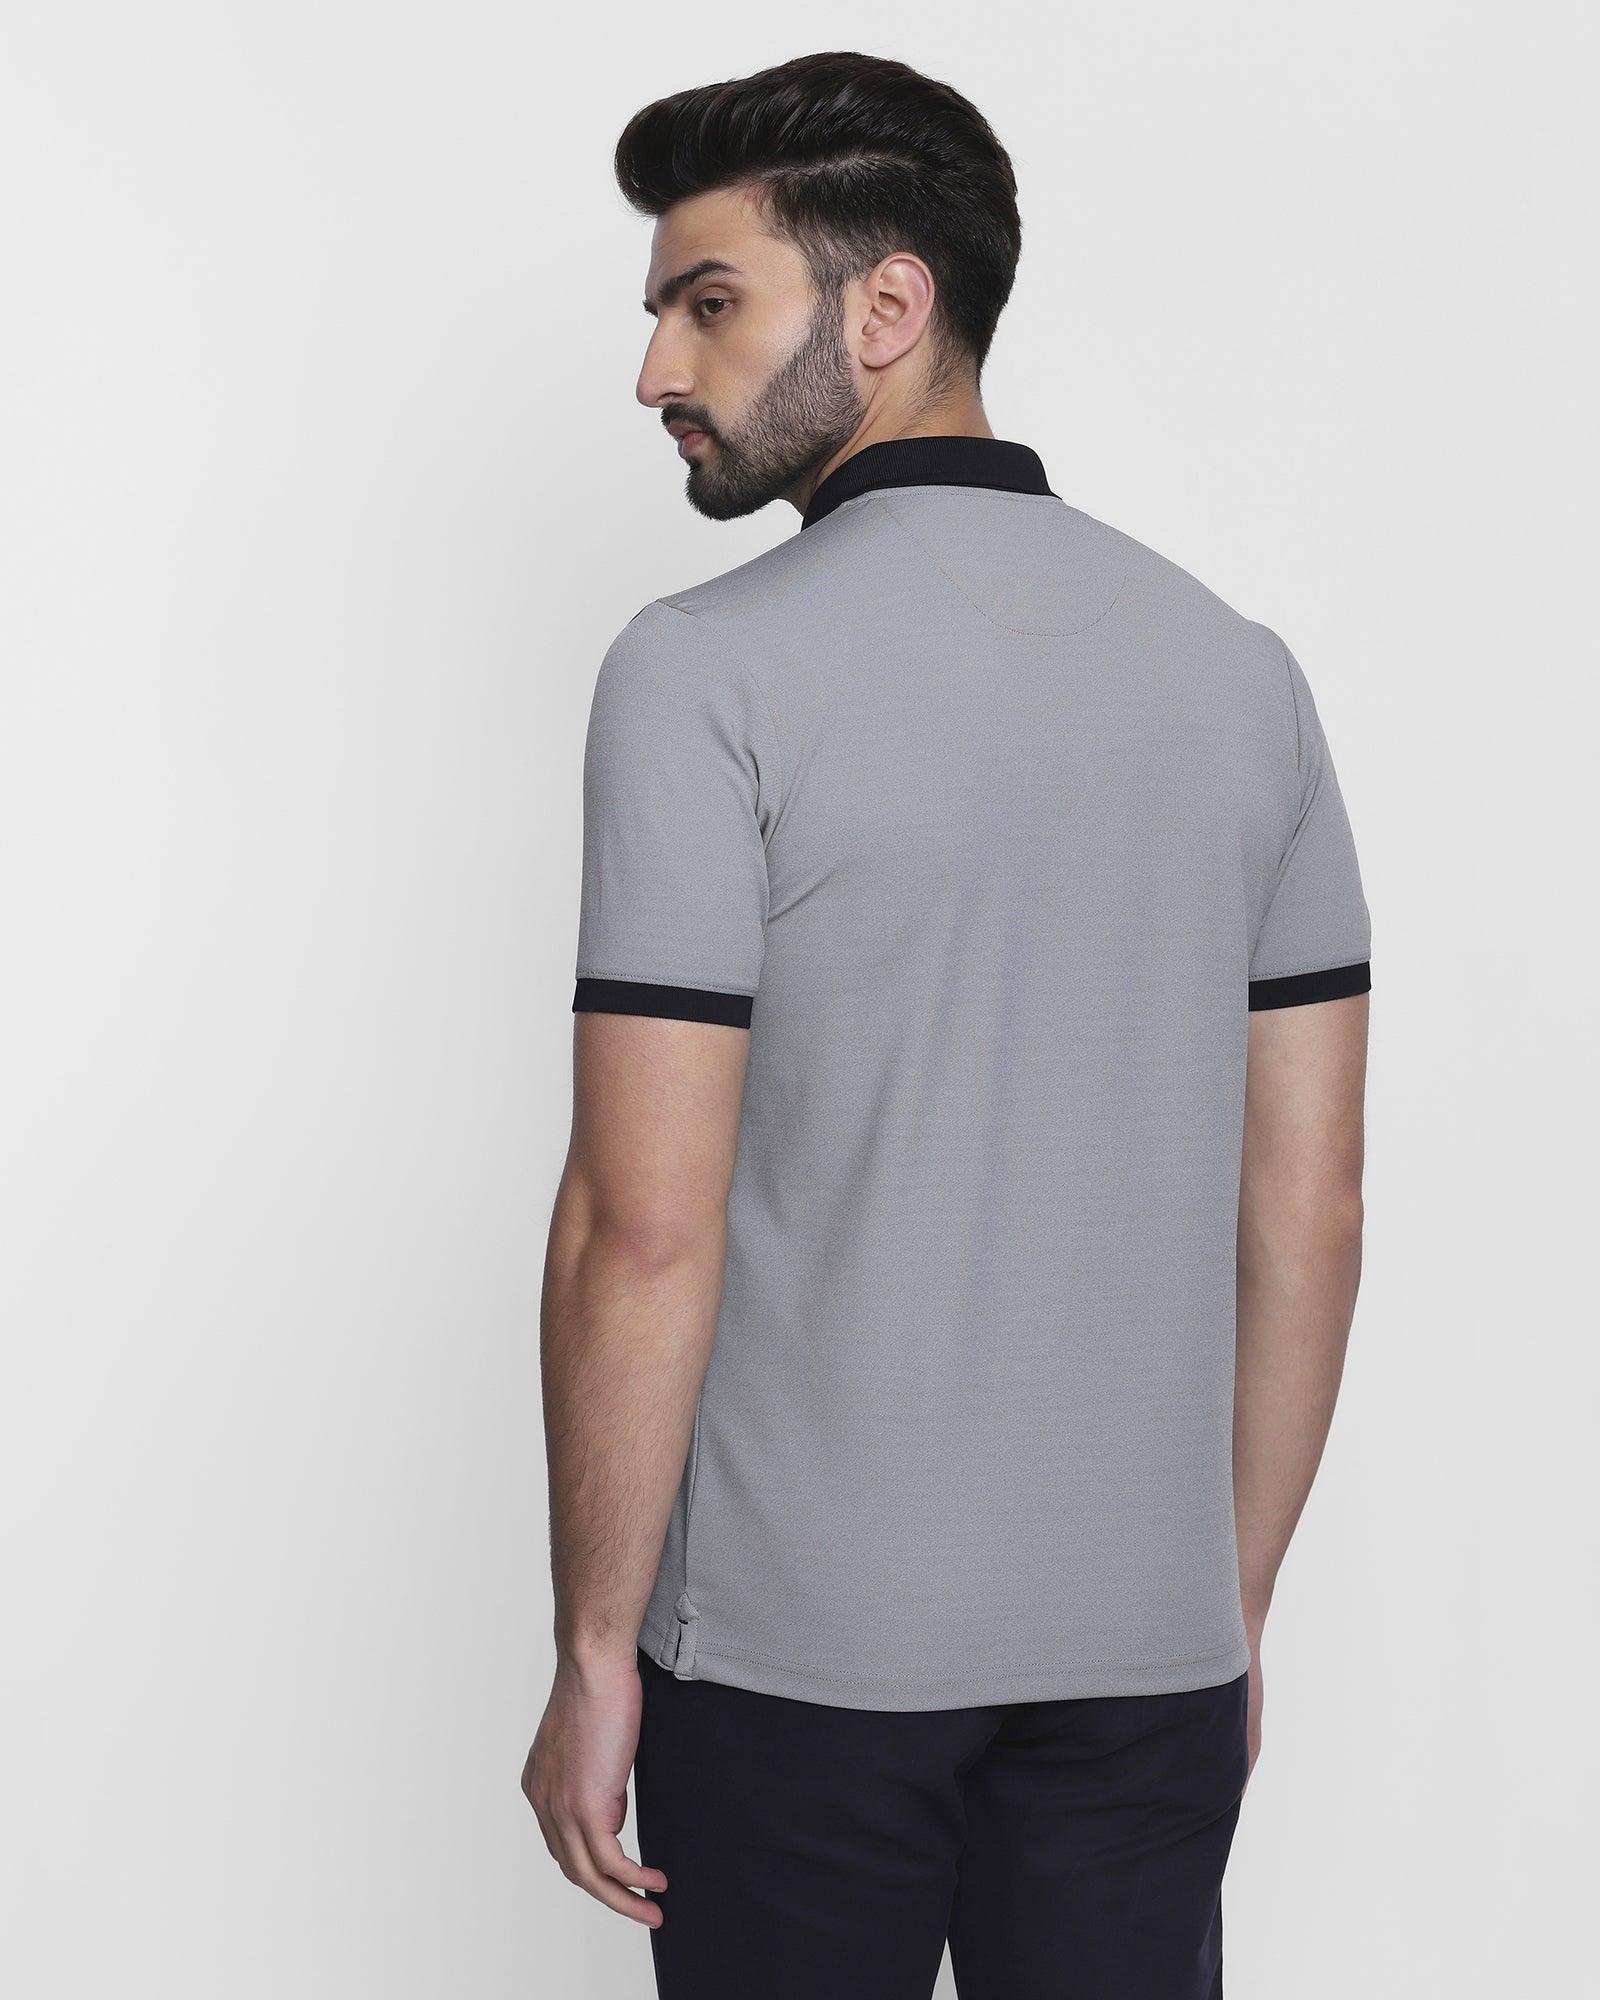 TechPro Polo Light Grey Solid T Shirt - Elite